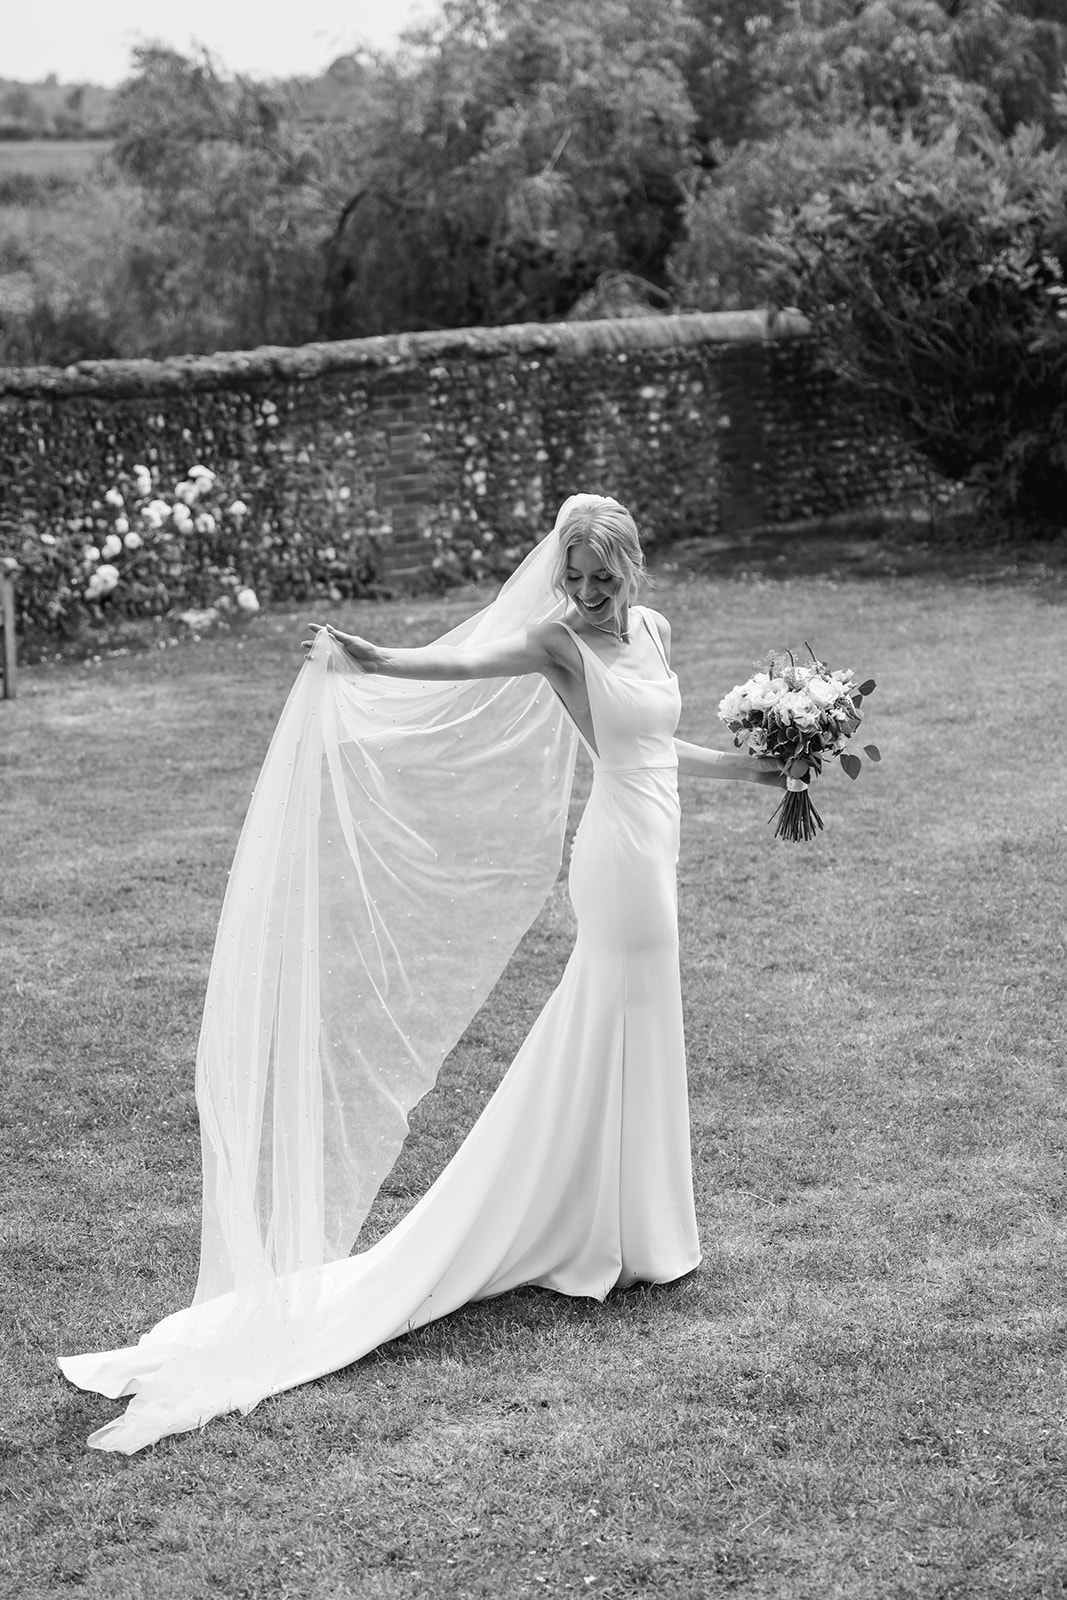 Bride waving dressat a Bury Manor Barn Wedding in Sussex. Photographer OliveJoy Photography.